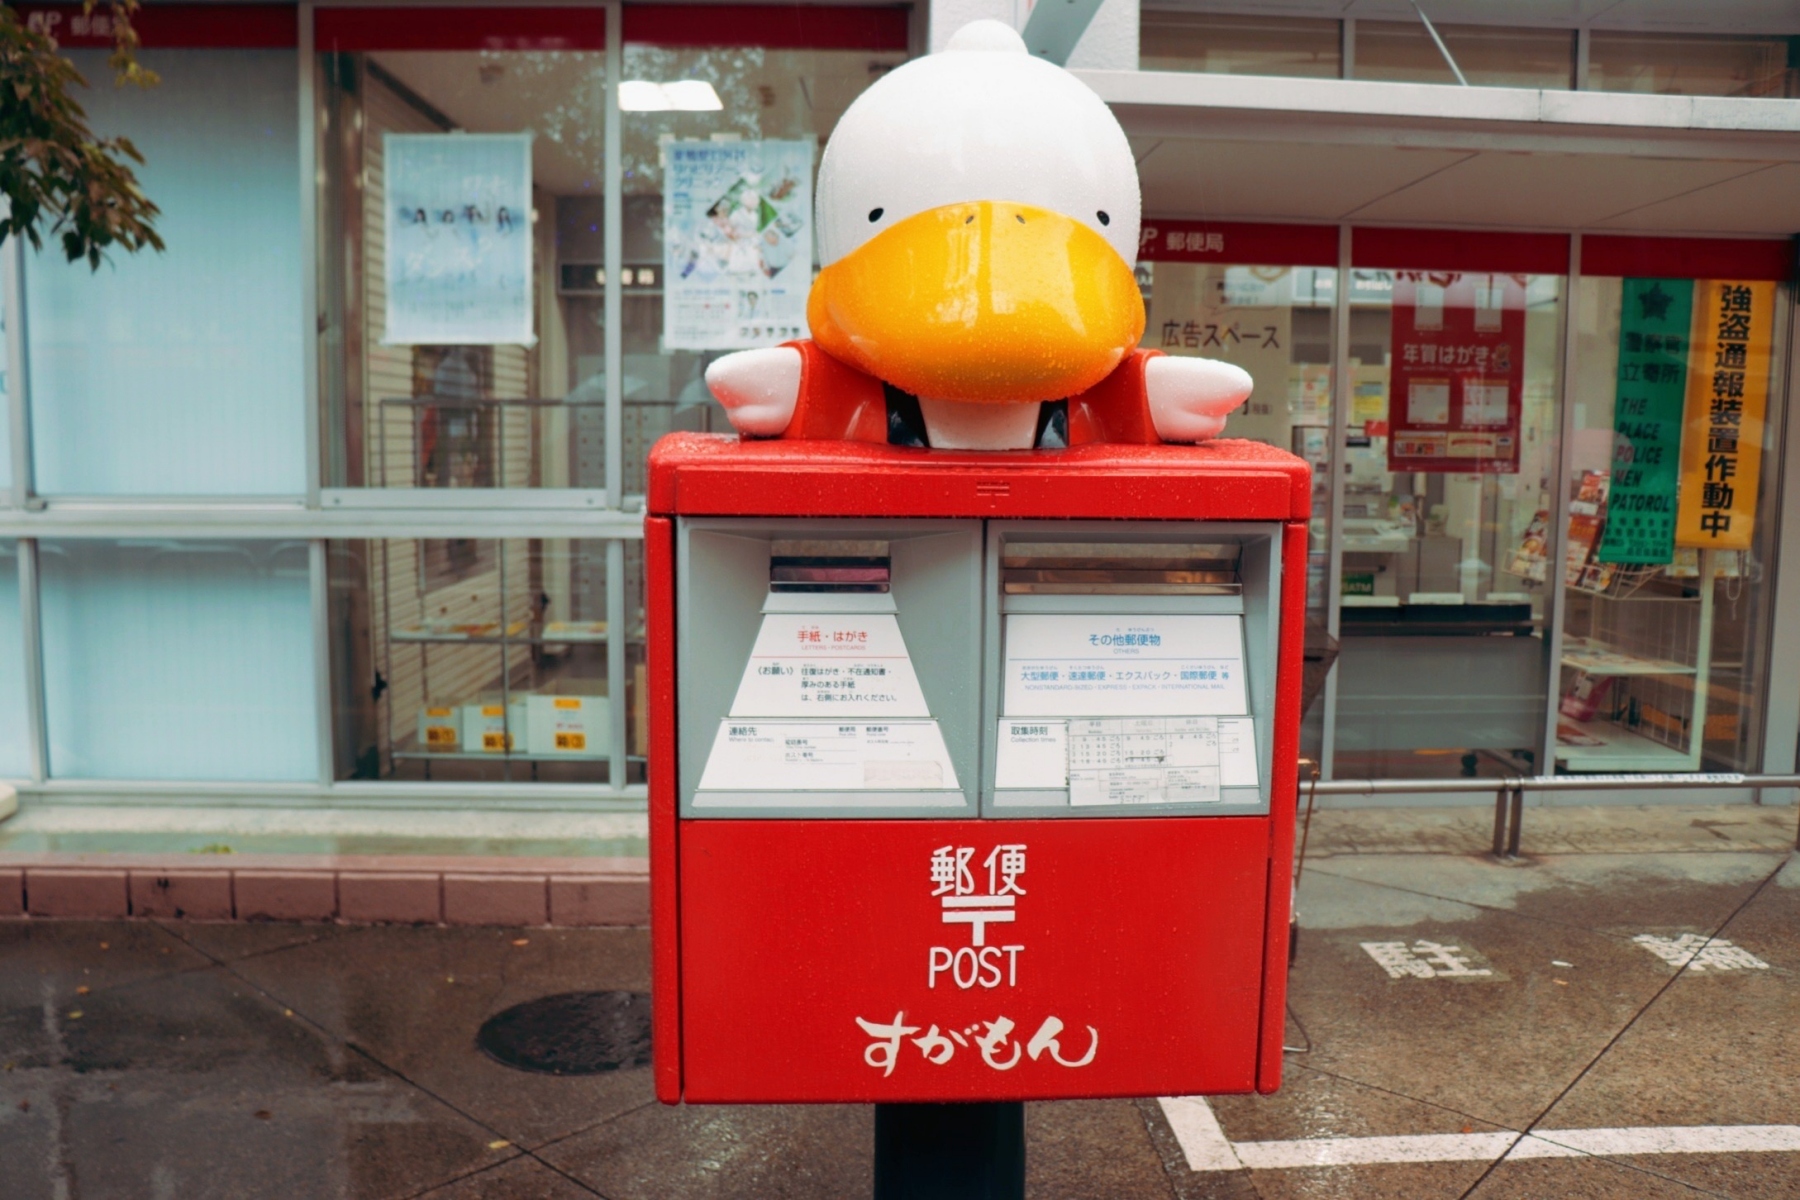 Japanese post box in Sugamo featuring the character Sugamon